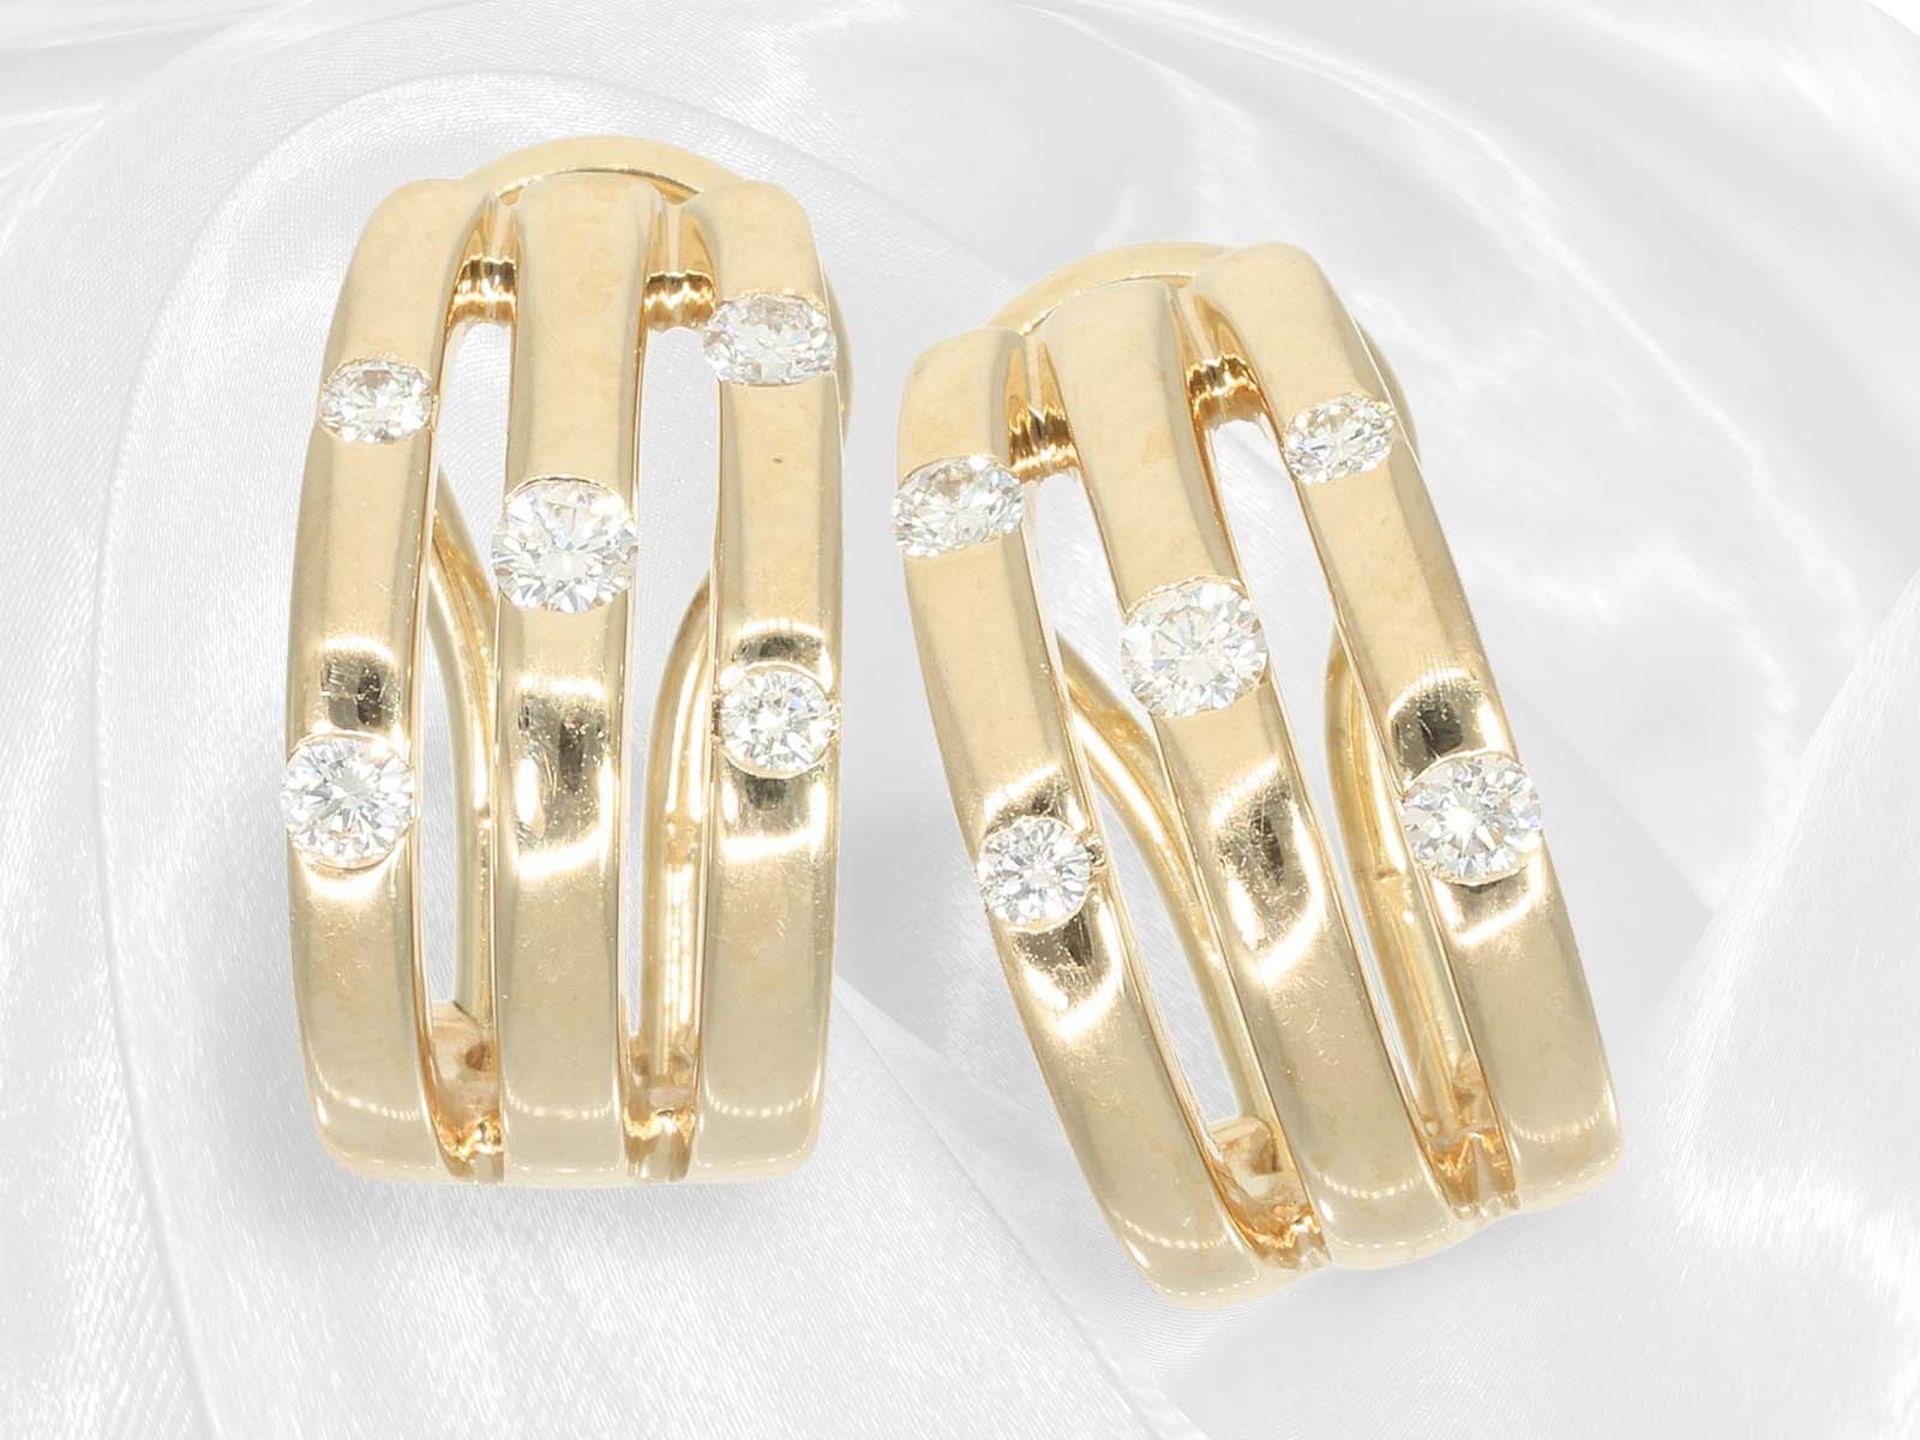 Fine gold brilliant-cut diamond earrings by the brand Christ